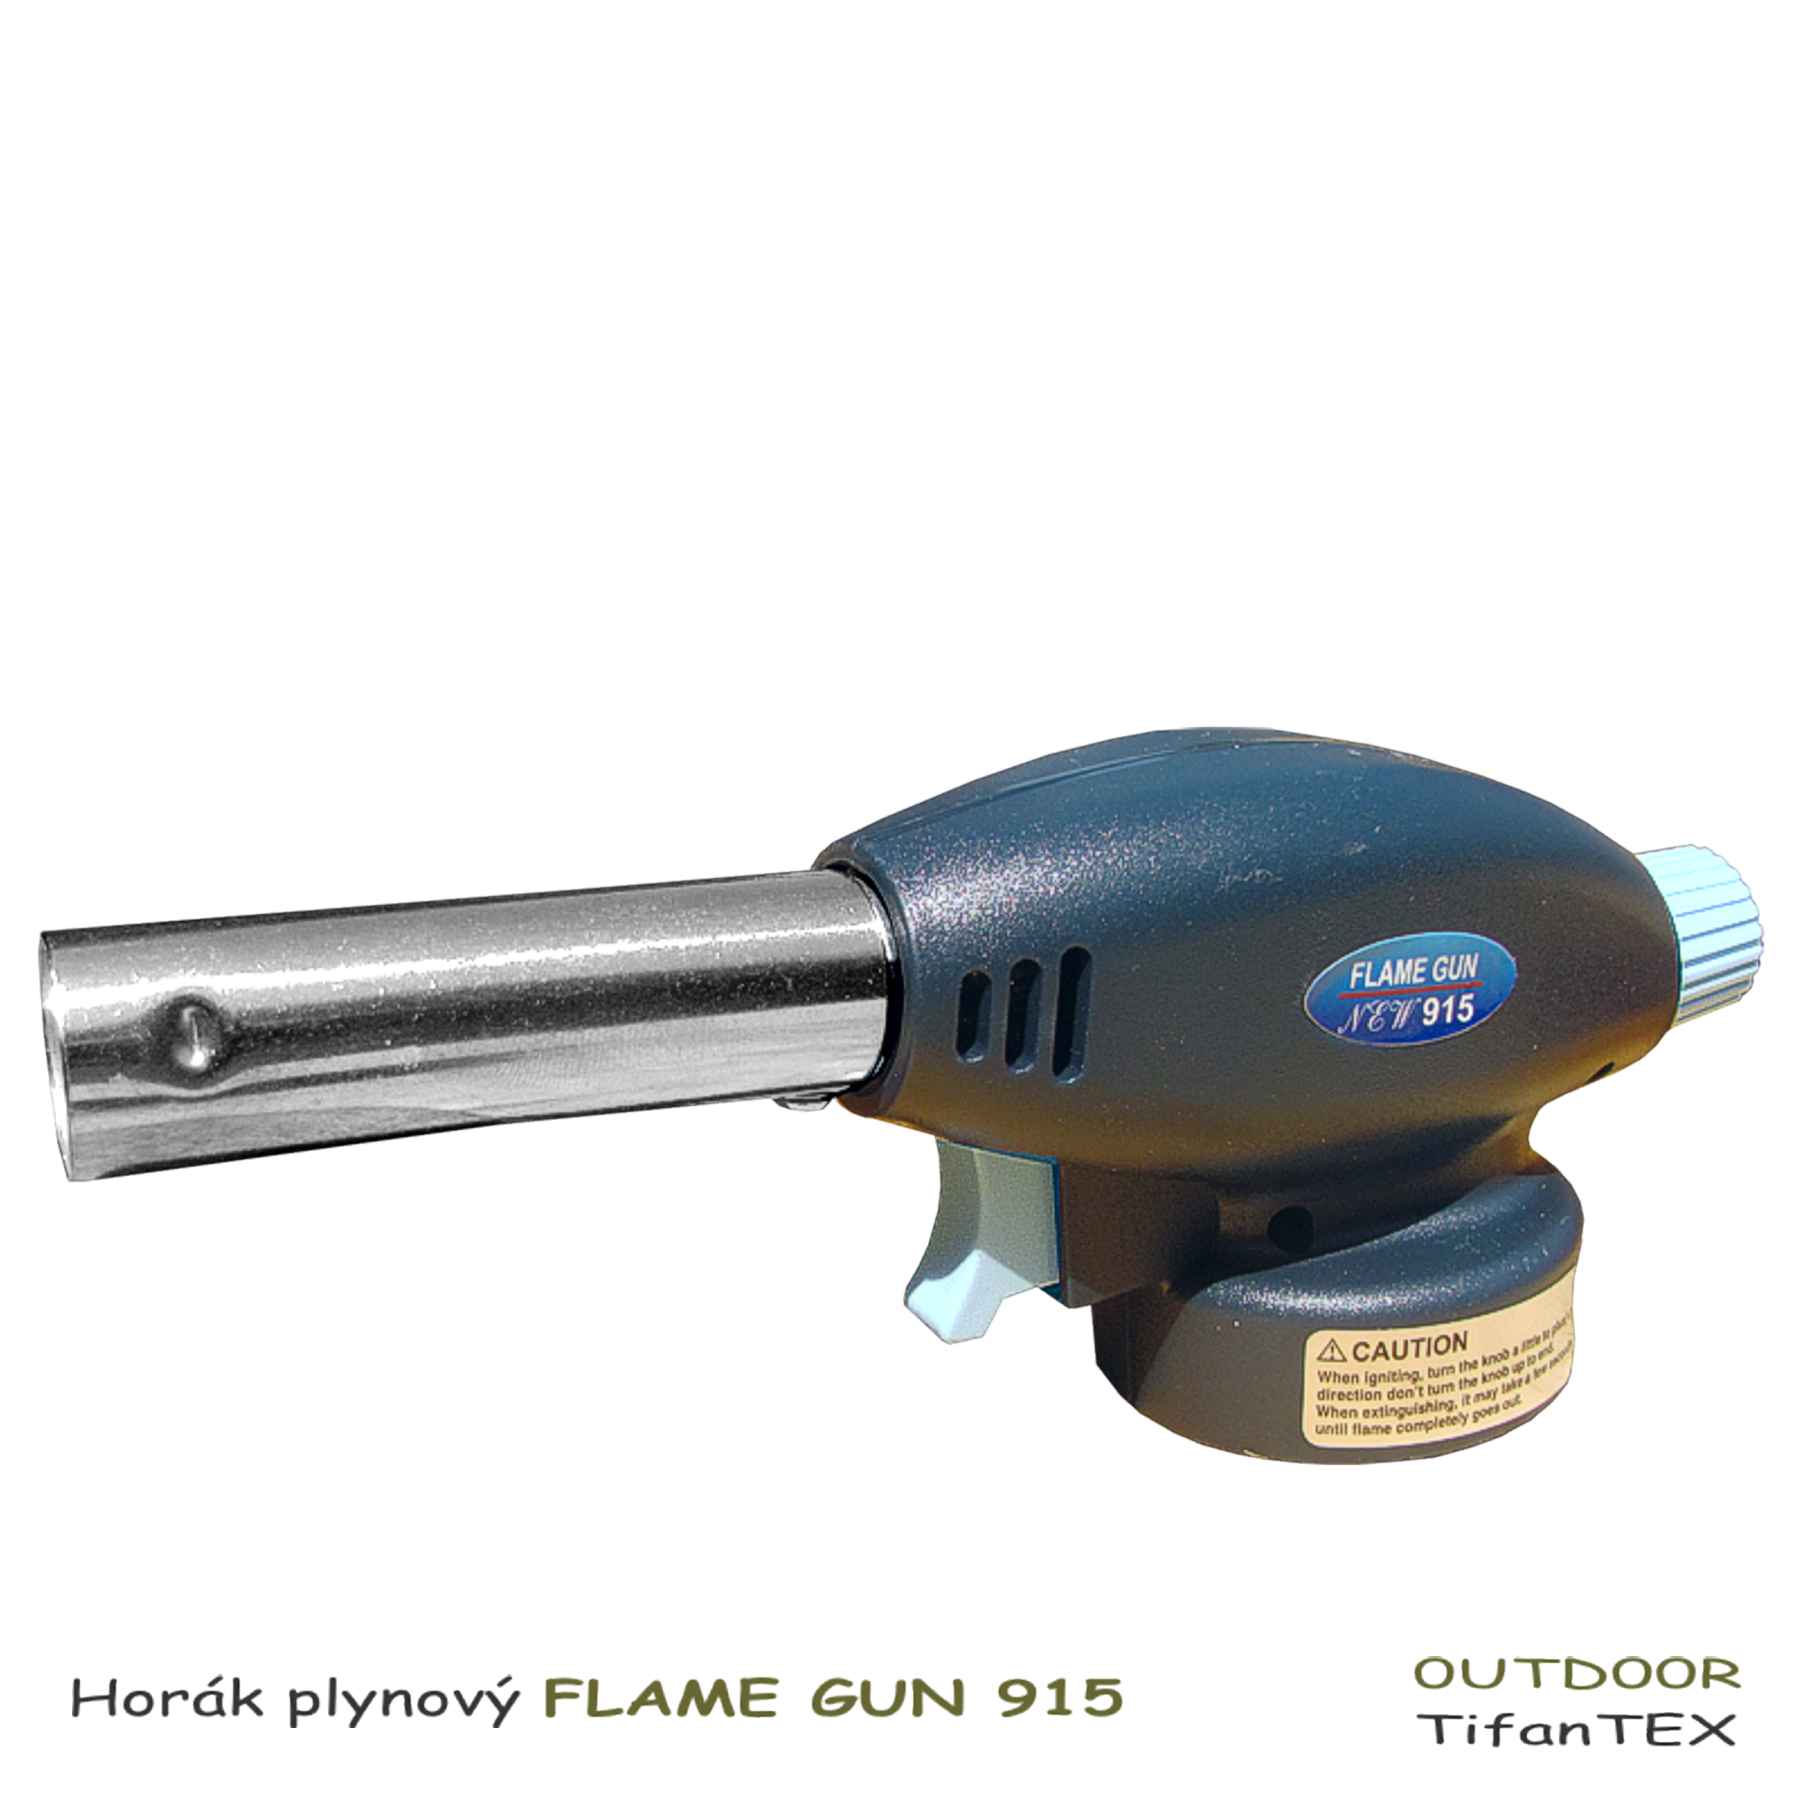 Elektrický horák plynový Flame Gun 915, dielňa Tifantex